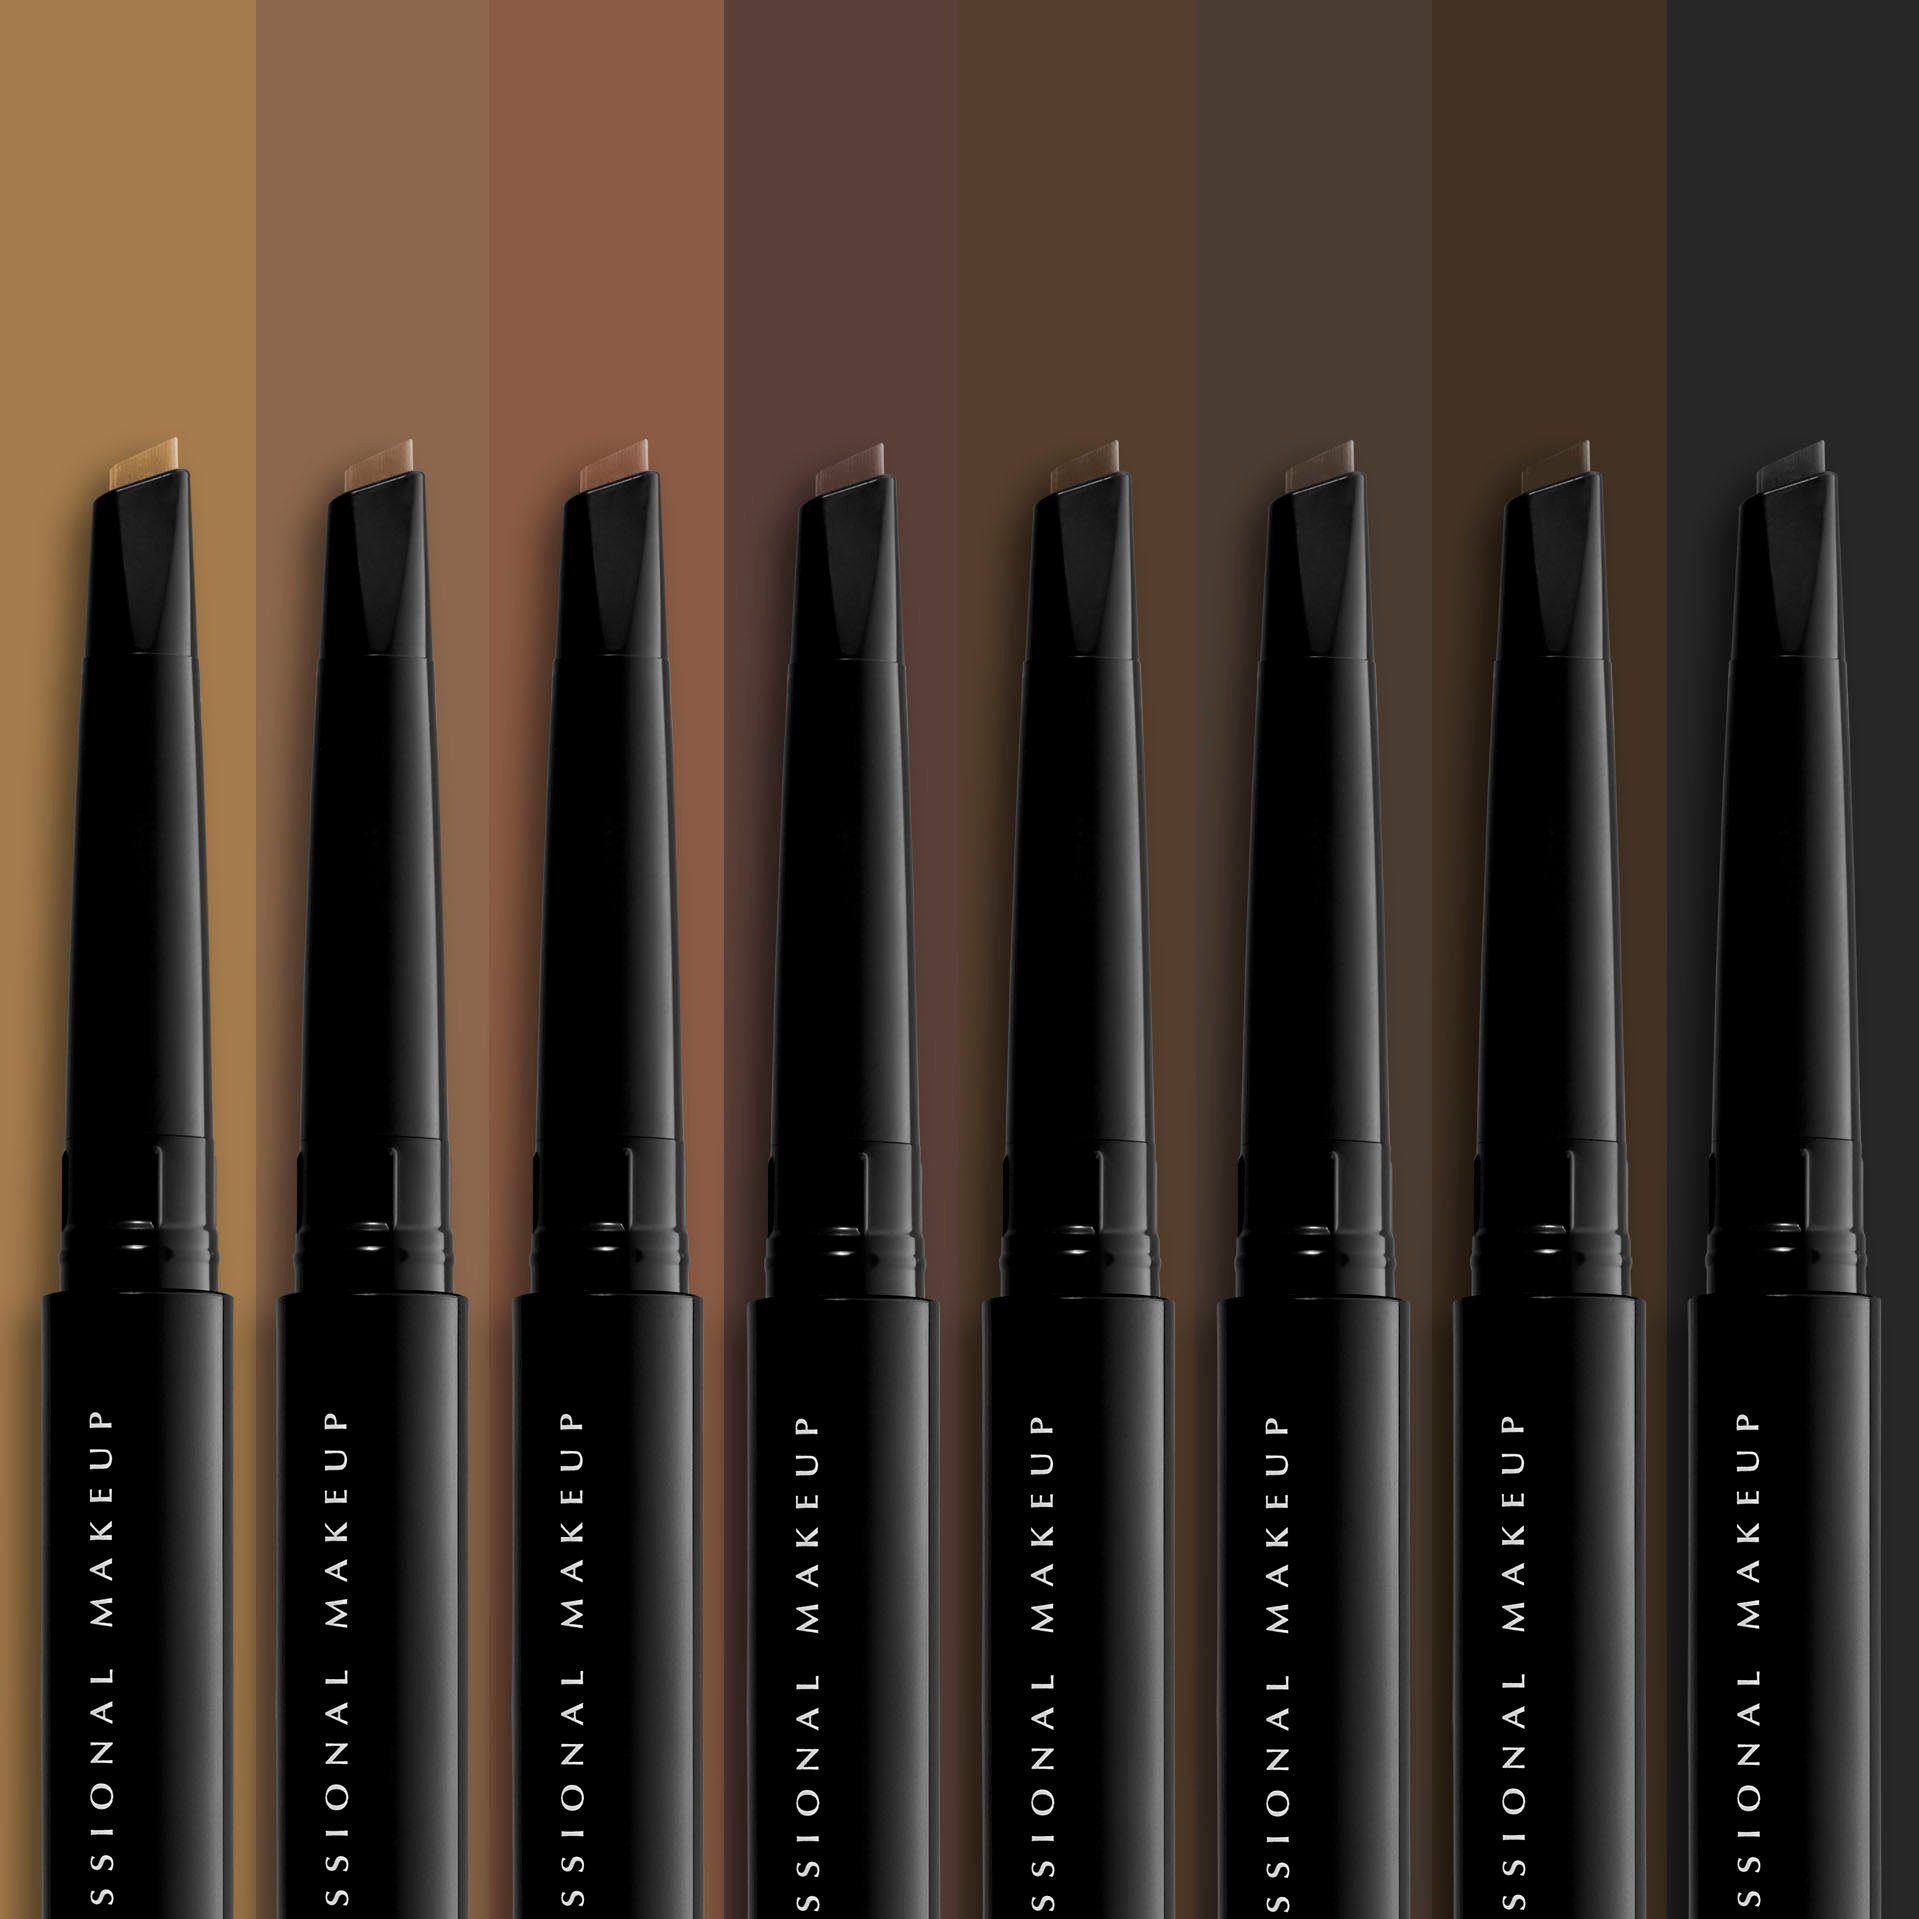 NYX Augenbrauen-Stift Professional Makeup Eyebrow ash Pomade brown Fill Pencil & Fluff